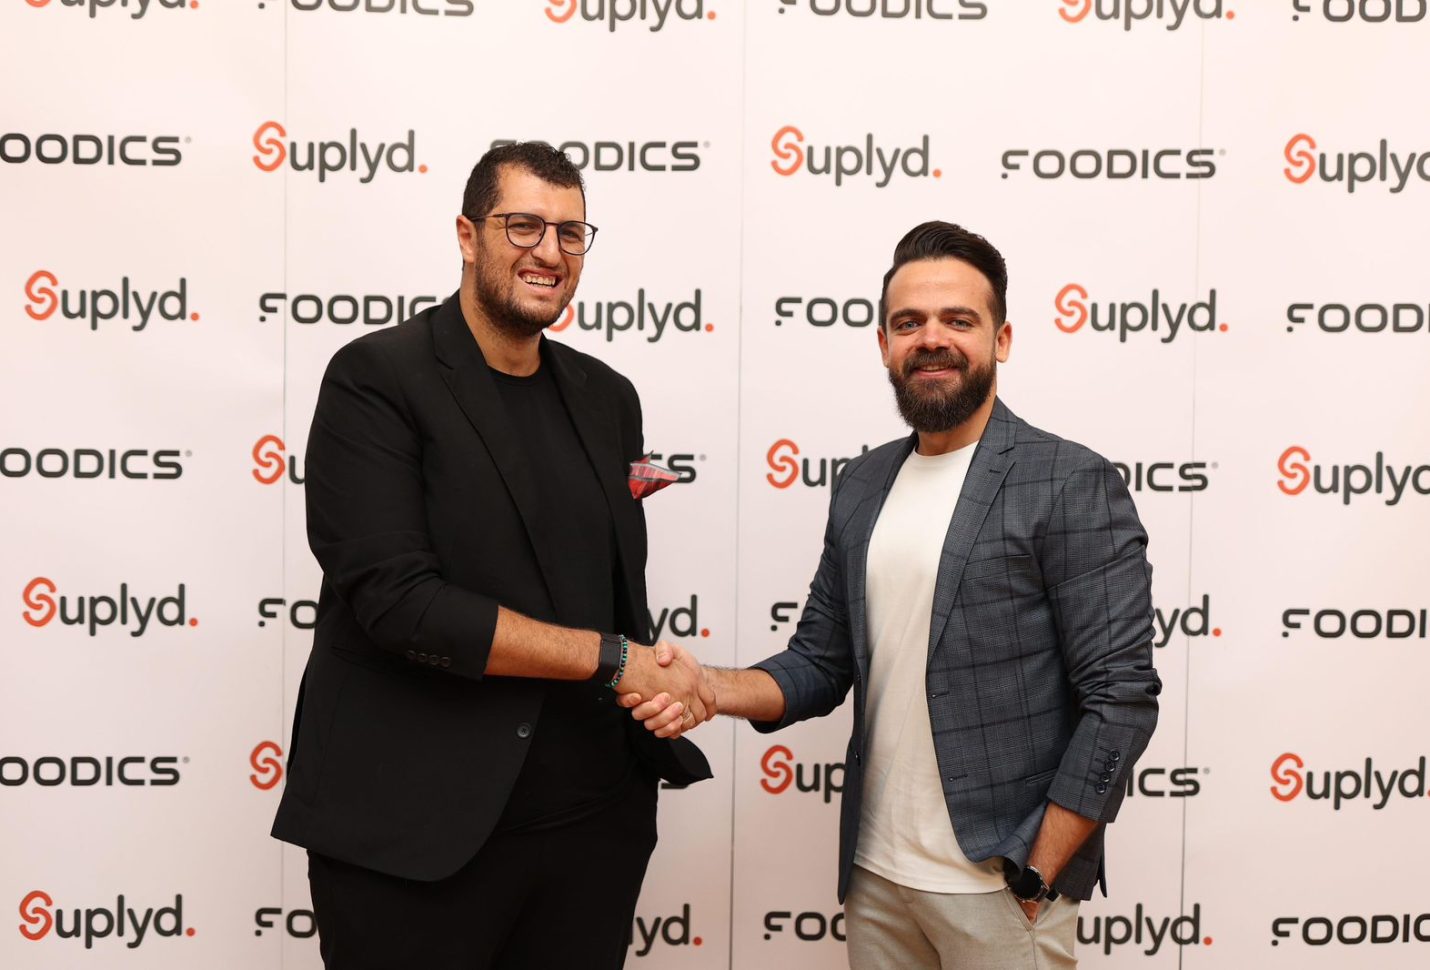  Foodics-Suplyd partnership backs digital transformation, Egypt Vision 2030